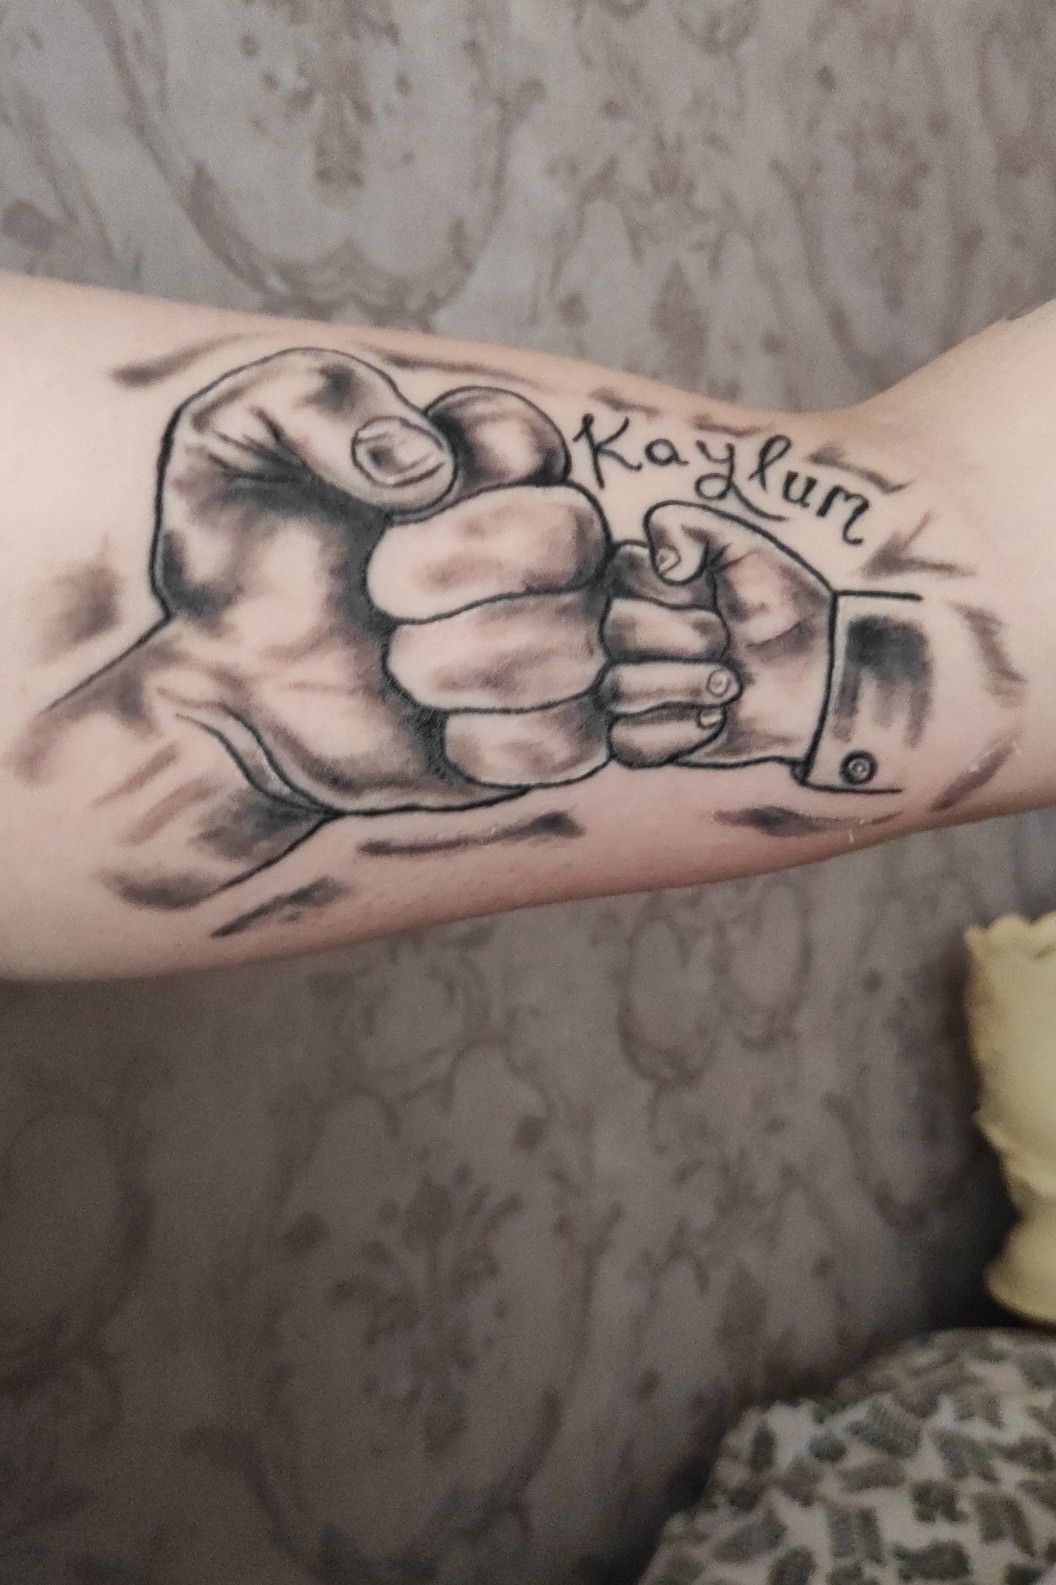 Fatherson fist bump  Eternity tattoo  piercing studio ltd  Facebook